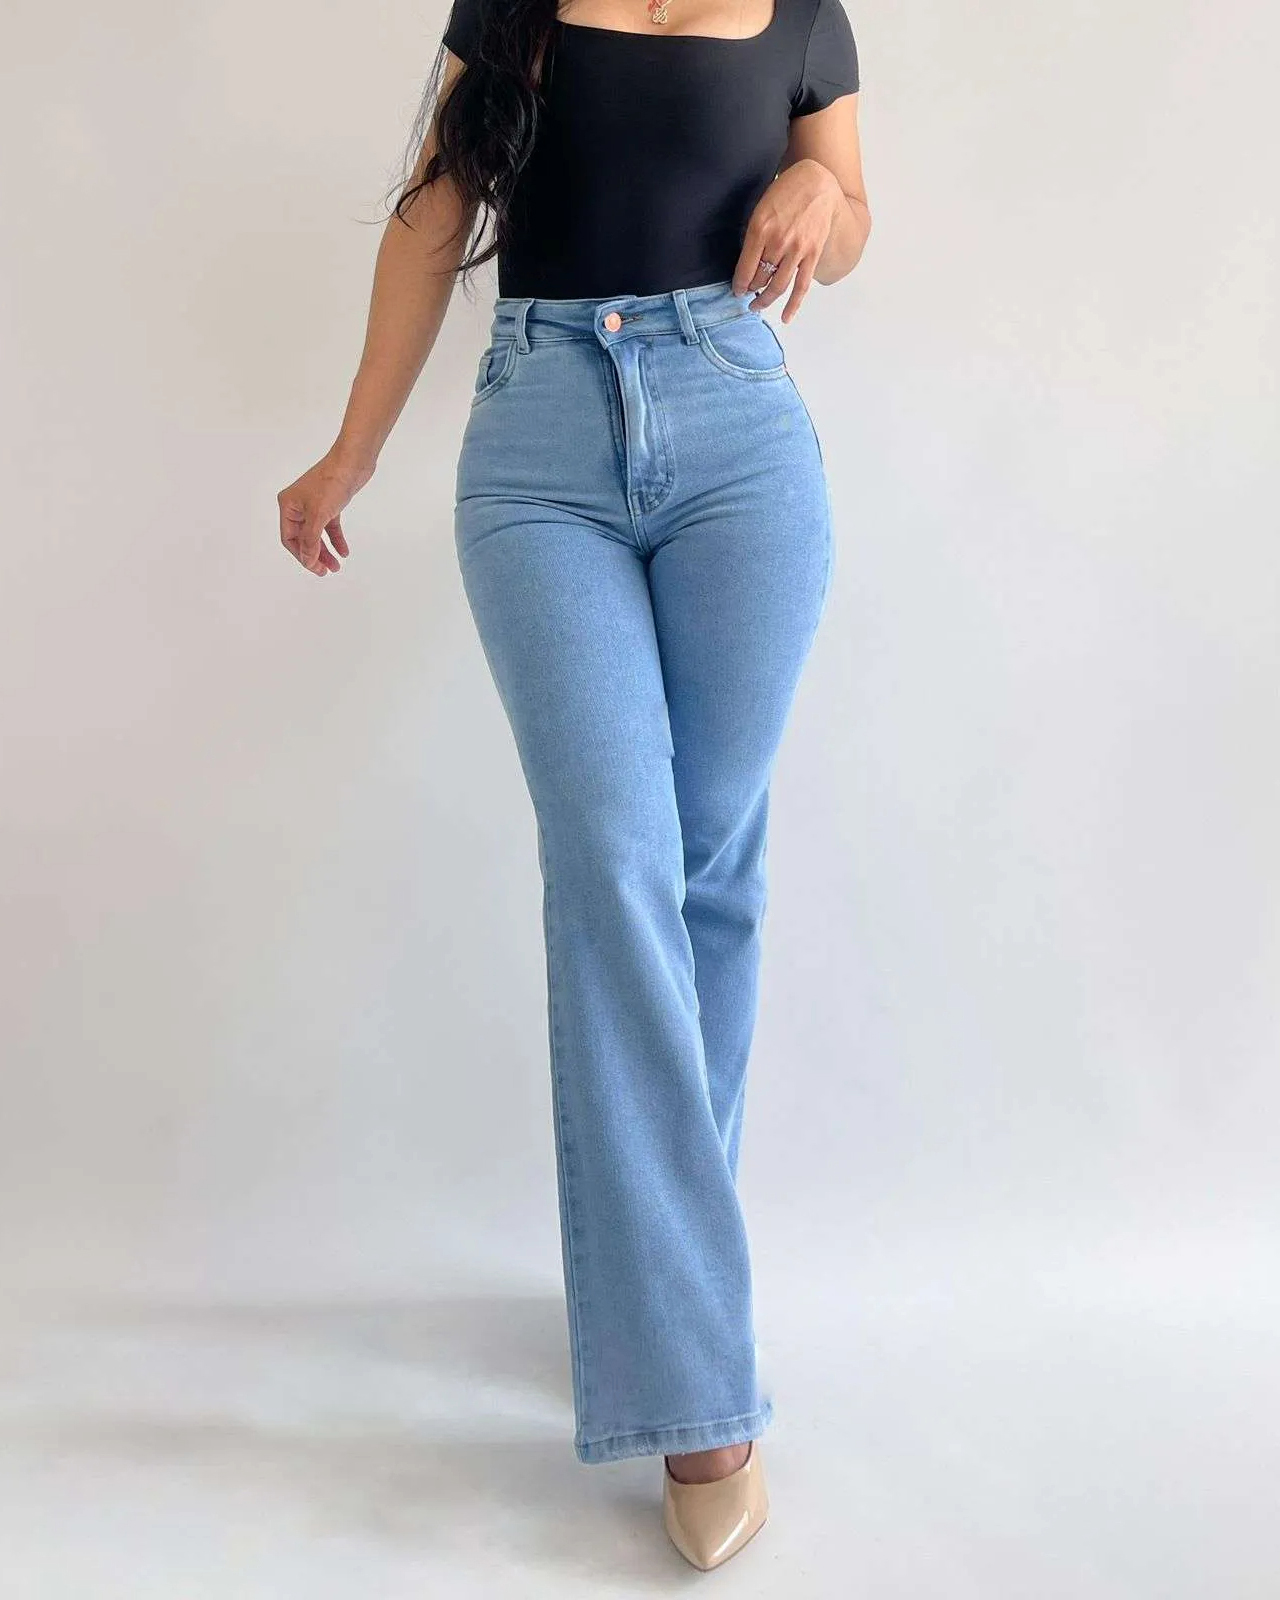 Classic light blue jeans